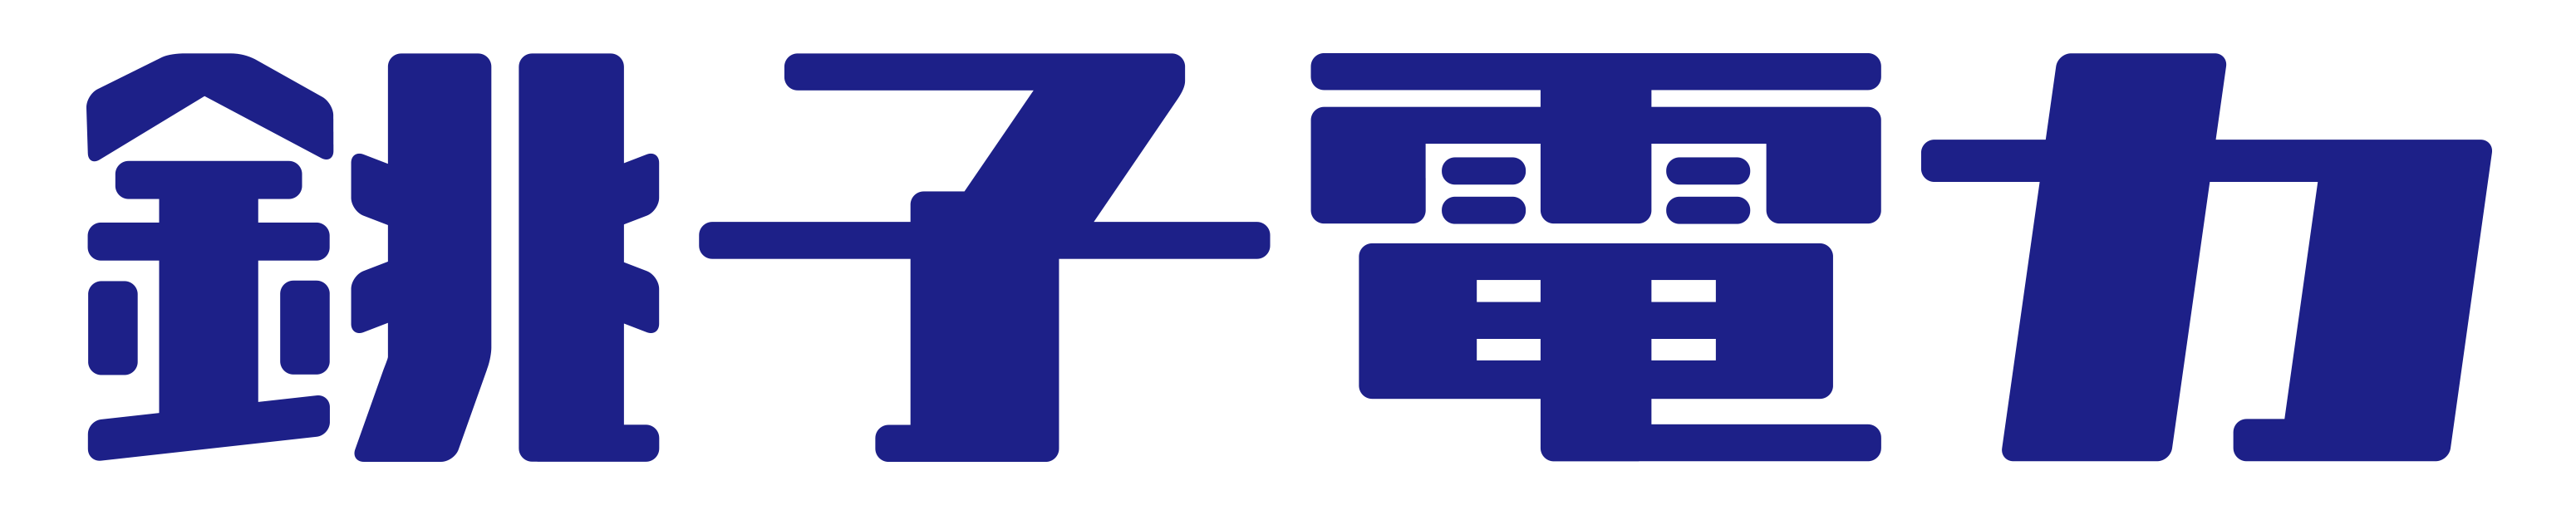 electricity-logo